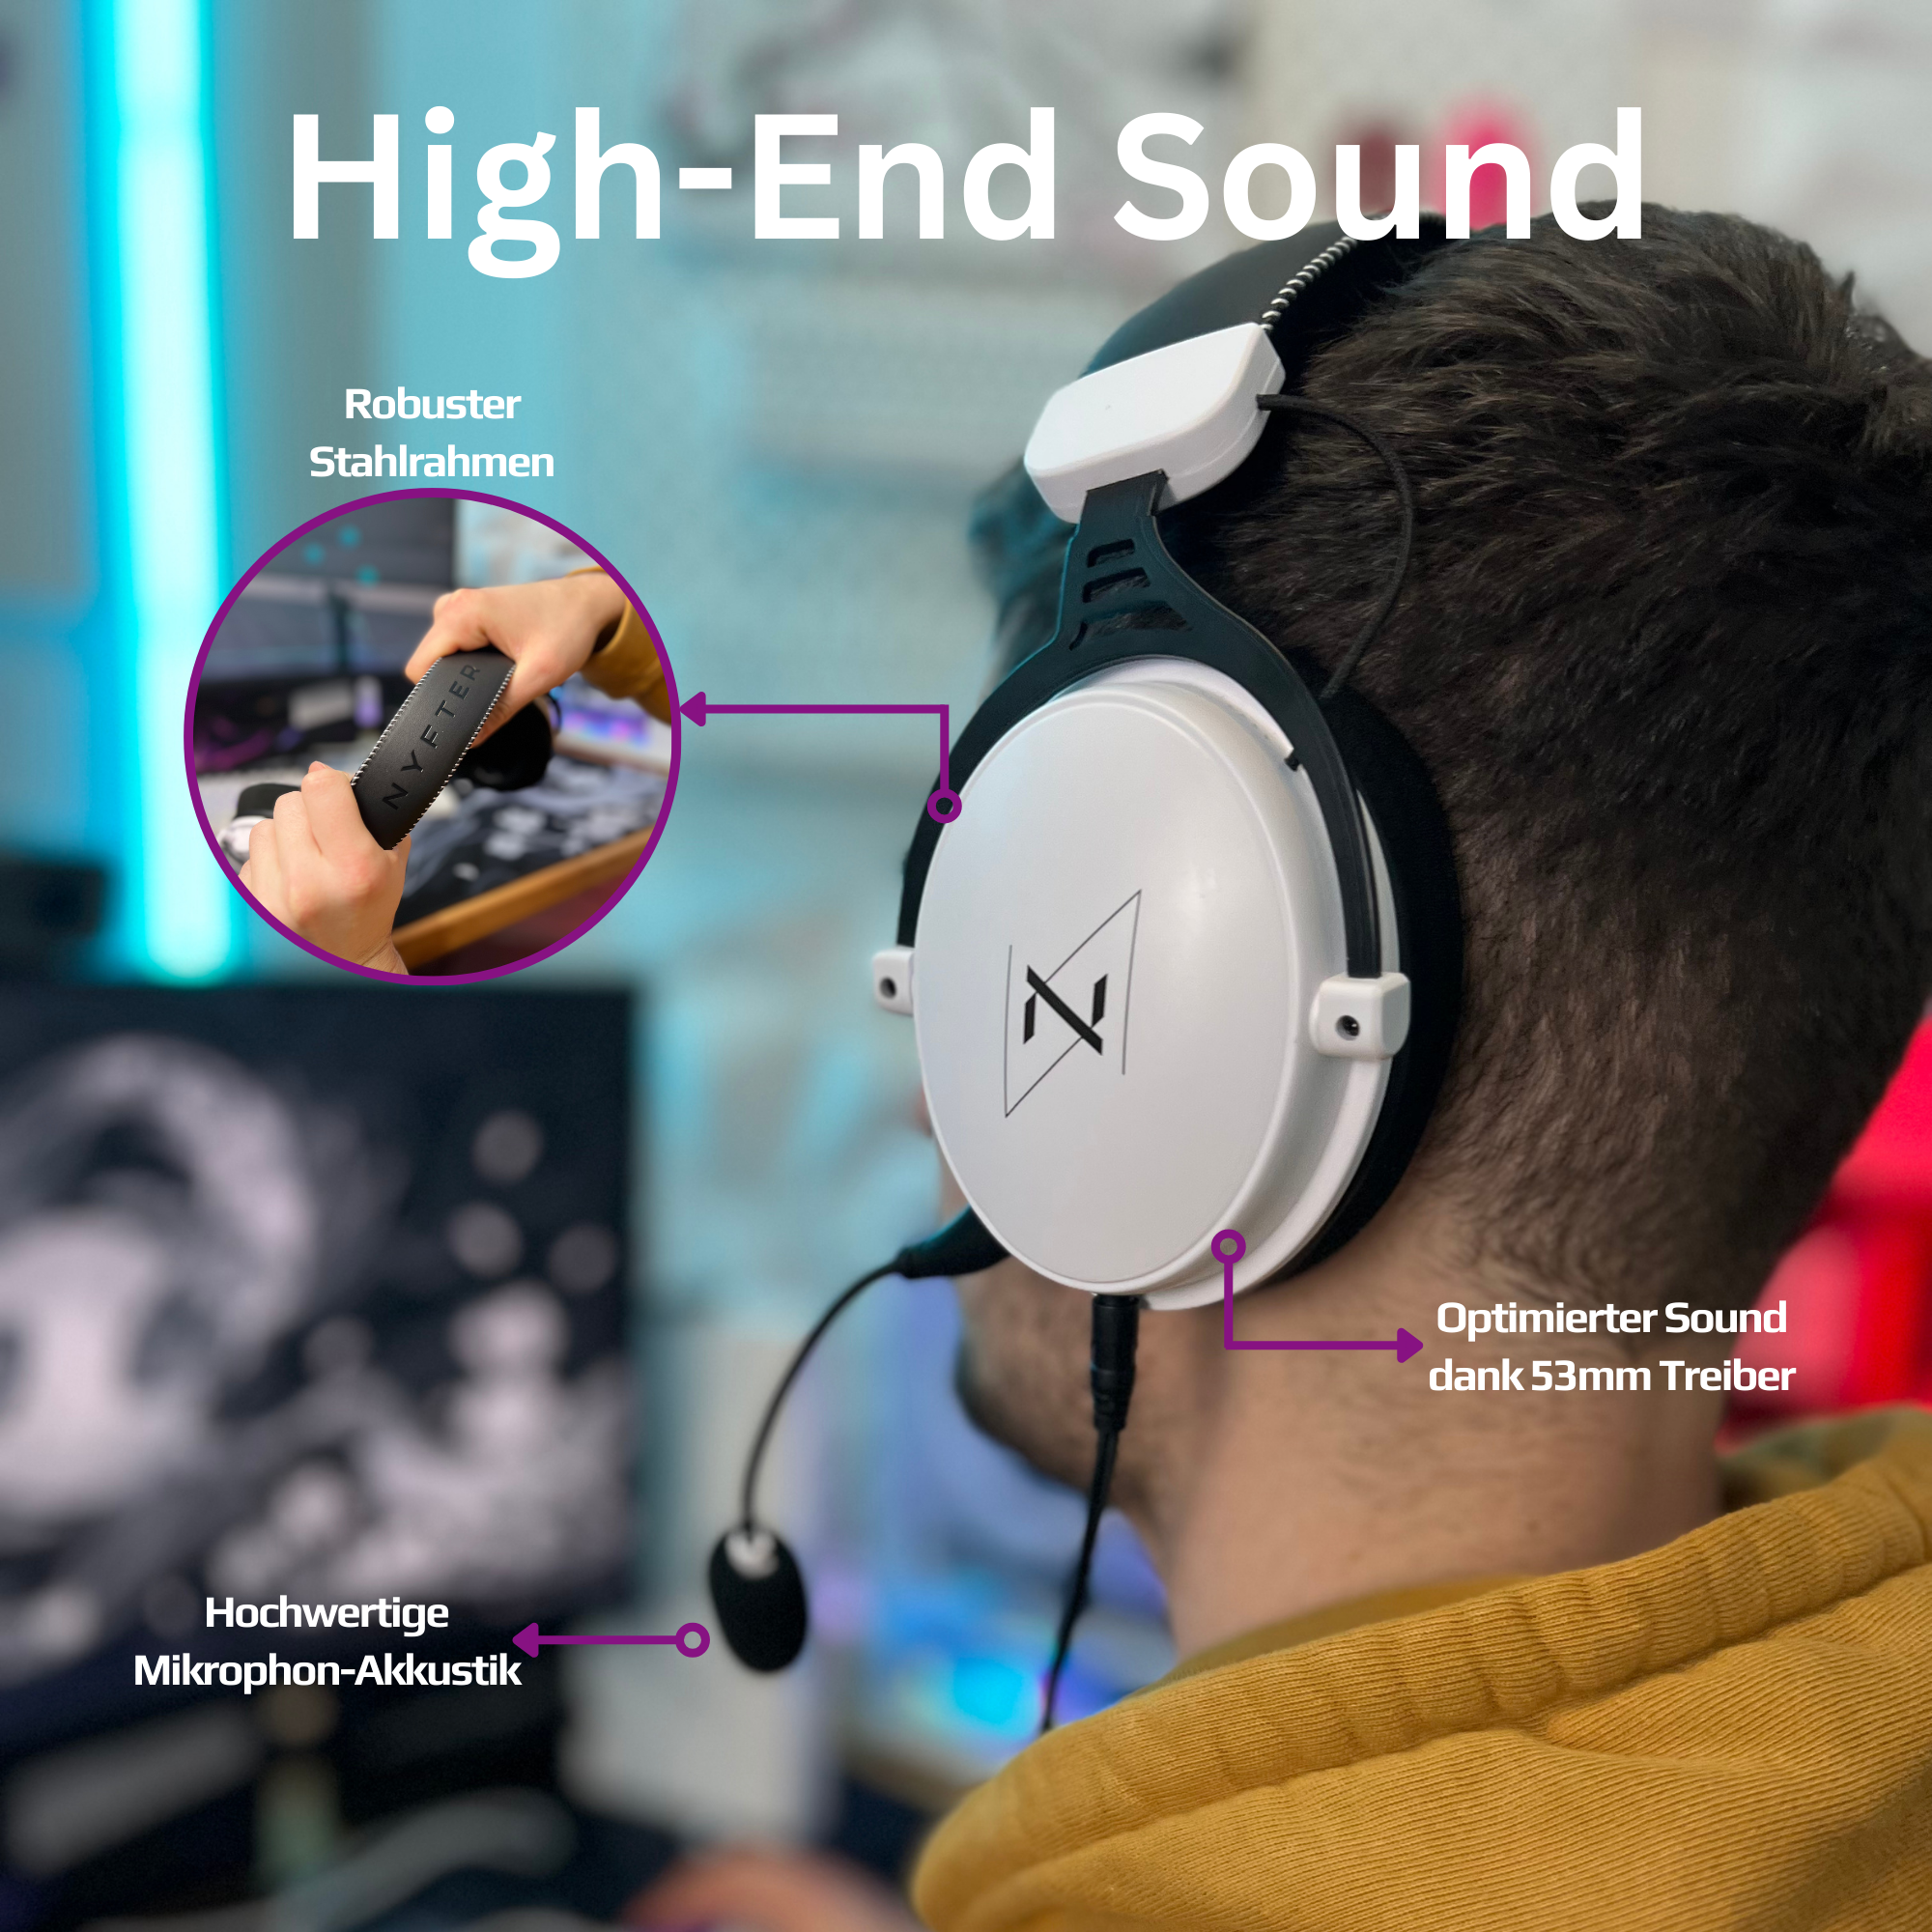 Nyfter® Nyf® H1 Pro Gaming Headset